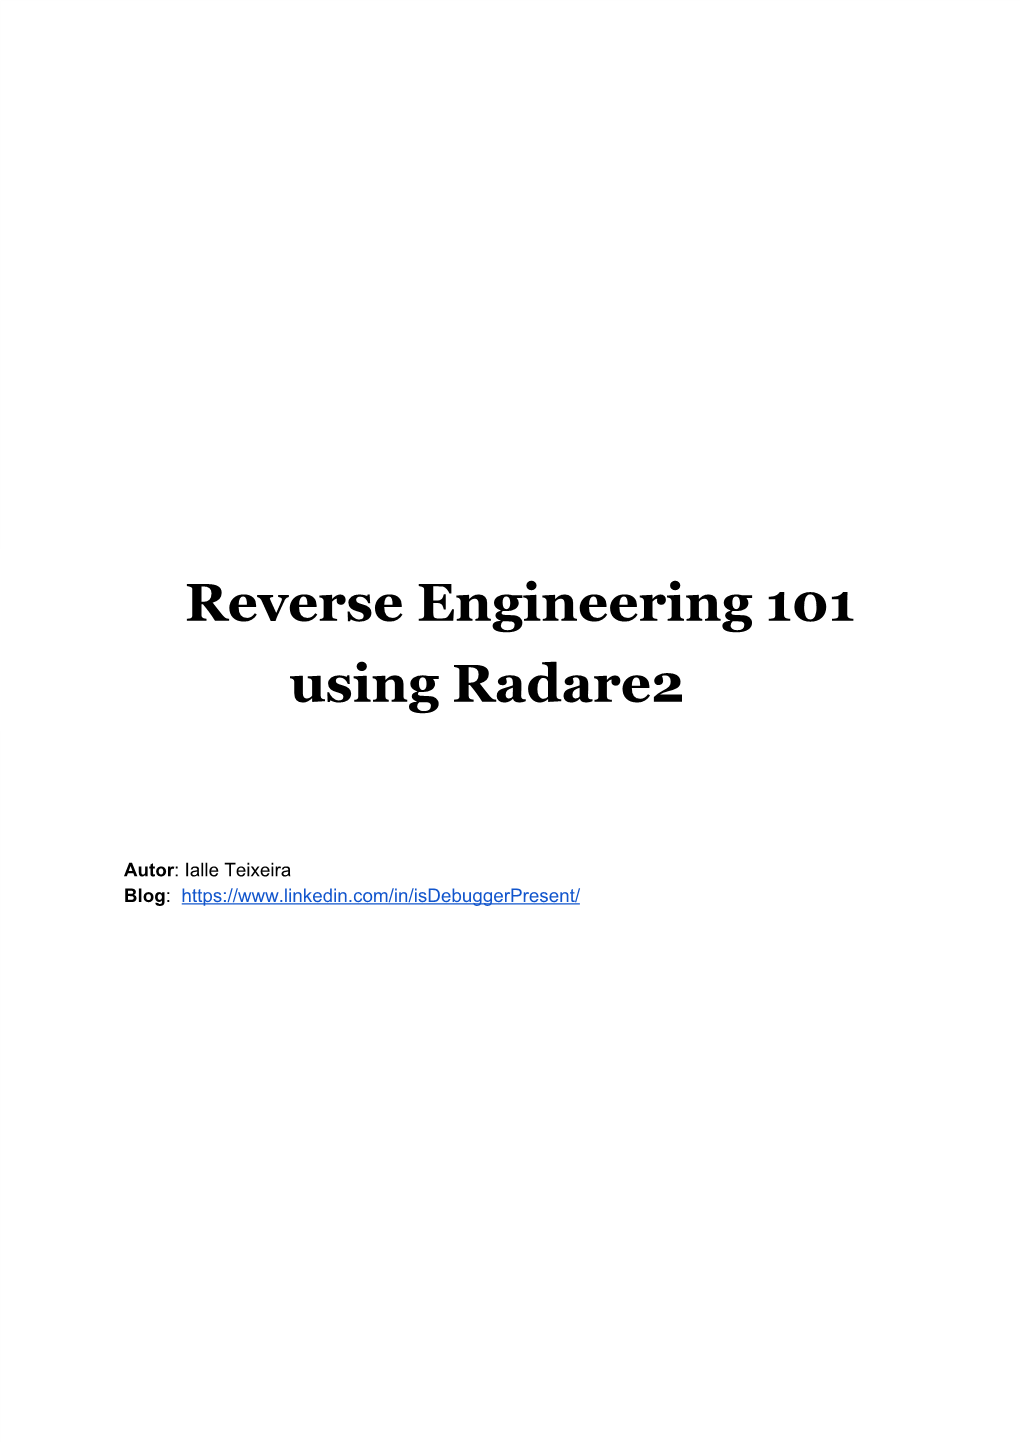 ​Reverse Engineering 101 Using Radare2